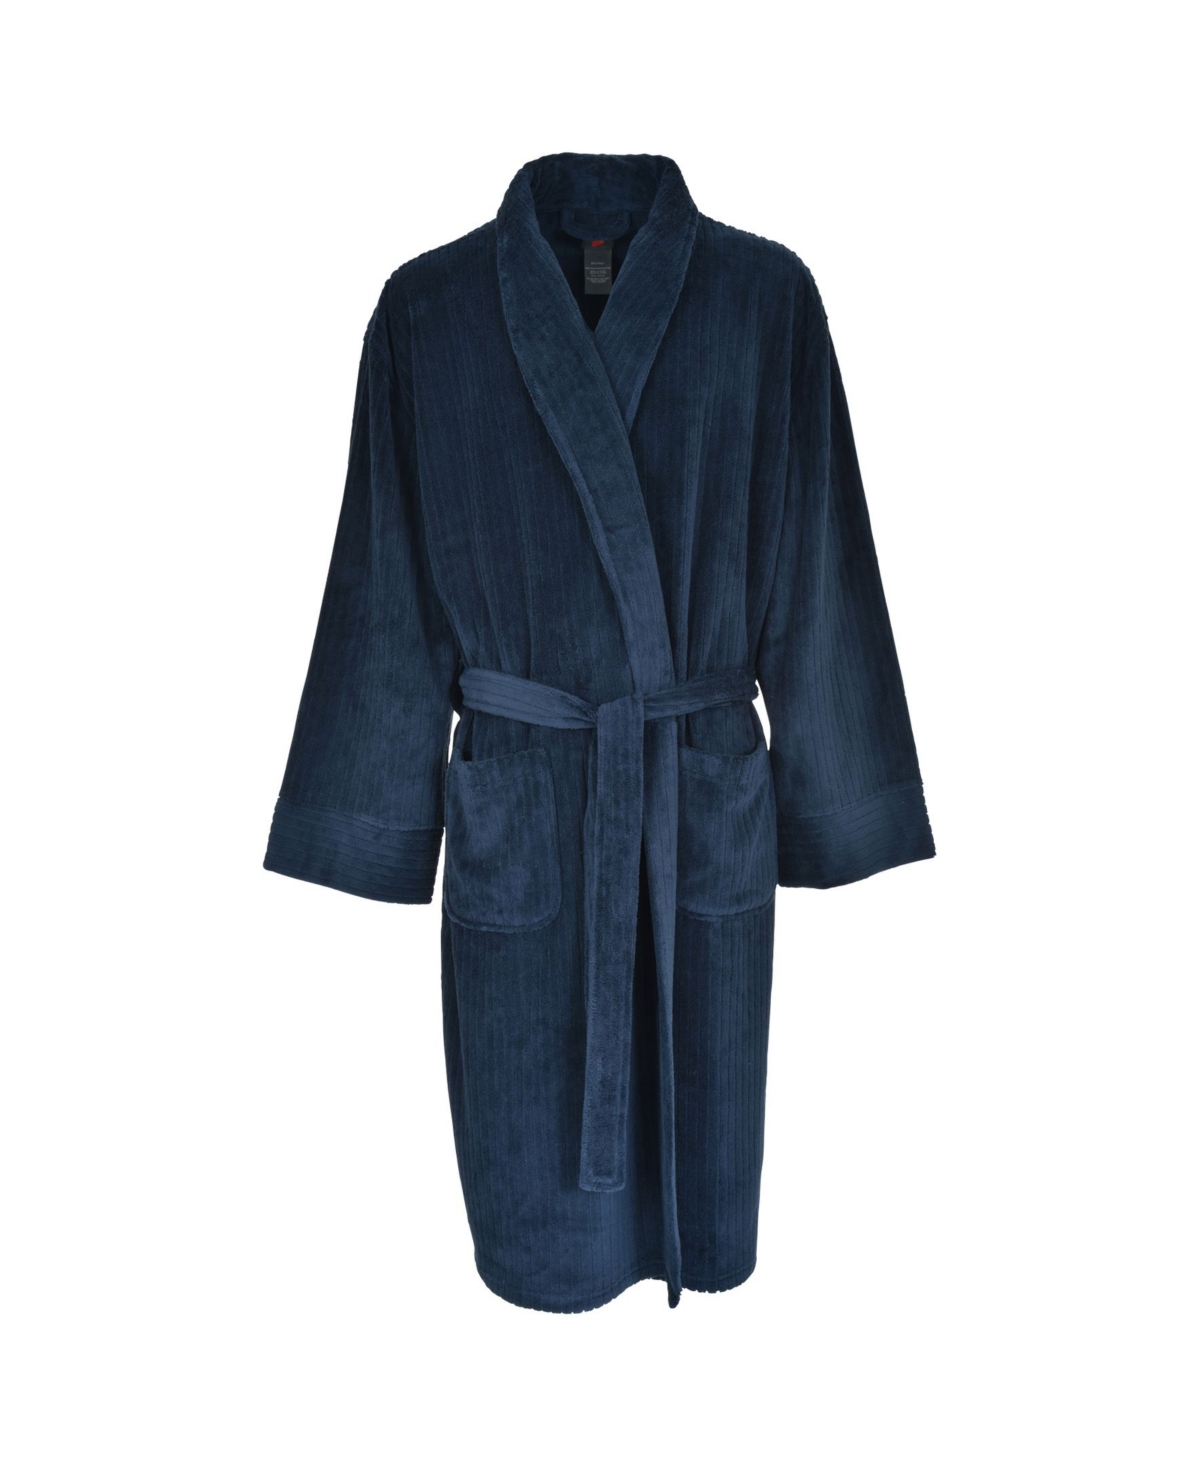 Hanes Men's Soft Touch Robe - Navy